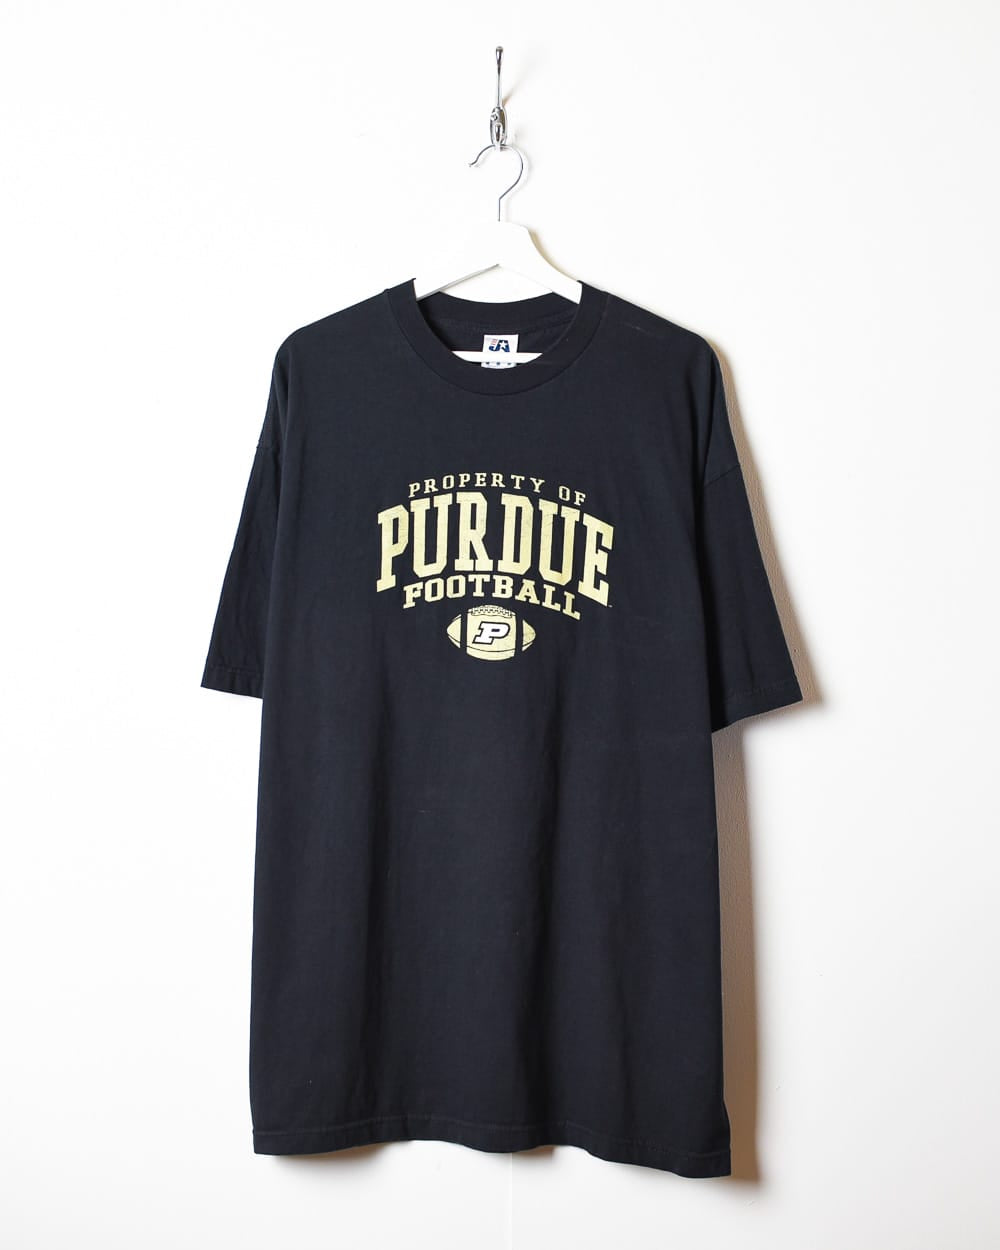 Black Property Of Purdue Football T-Shirt - XX-Large